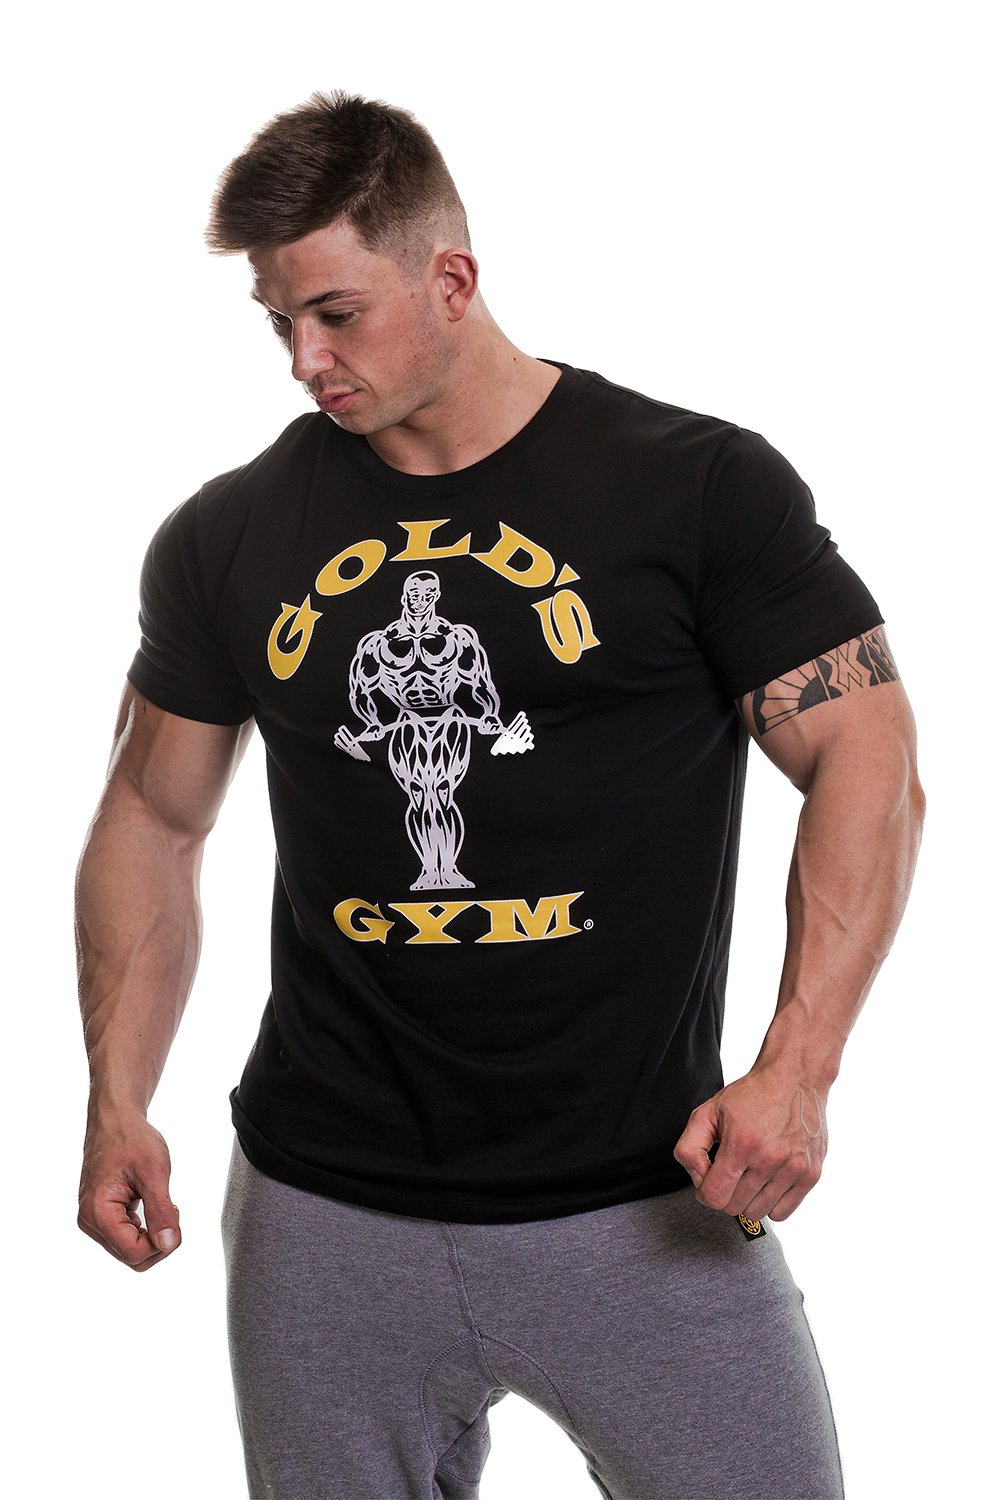 GOLDS GYM MUSCLE JOE T-SHIRT BLACK - BodyBeautifulApparel.com